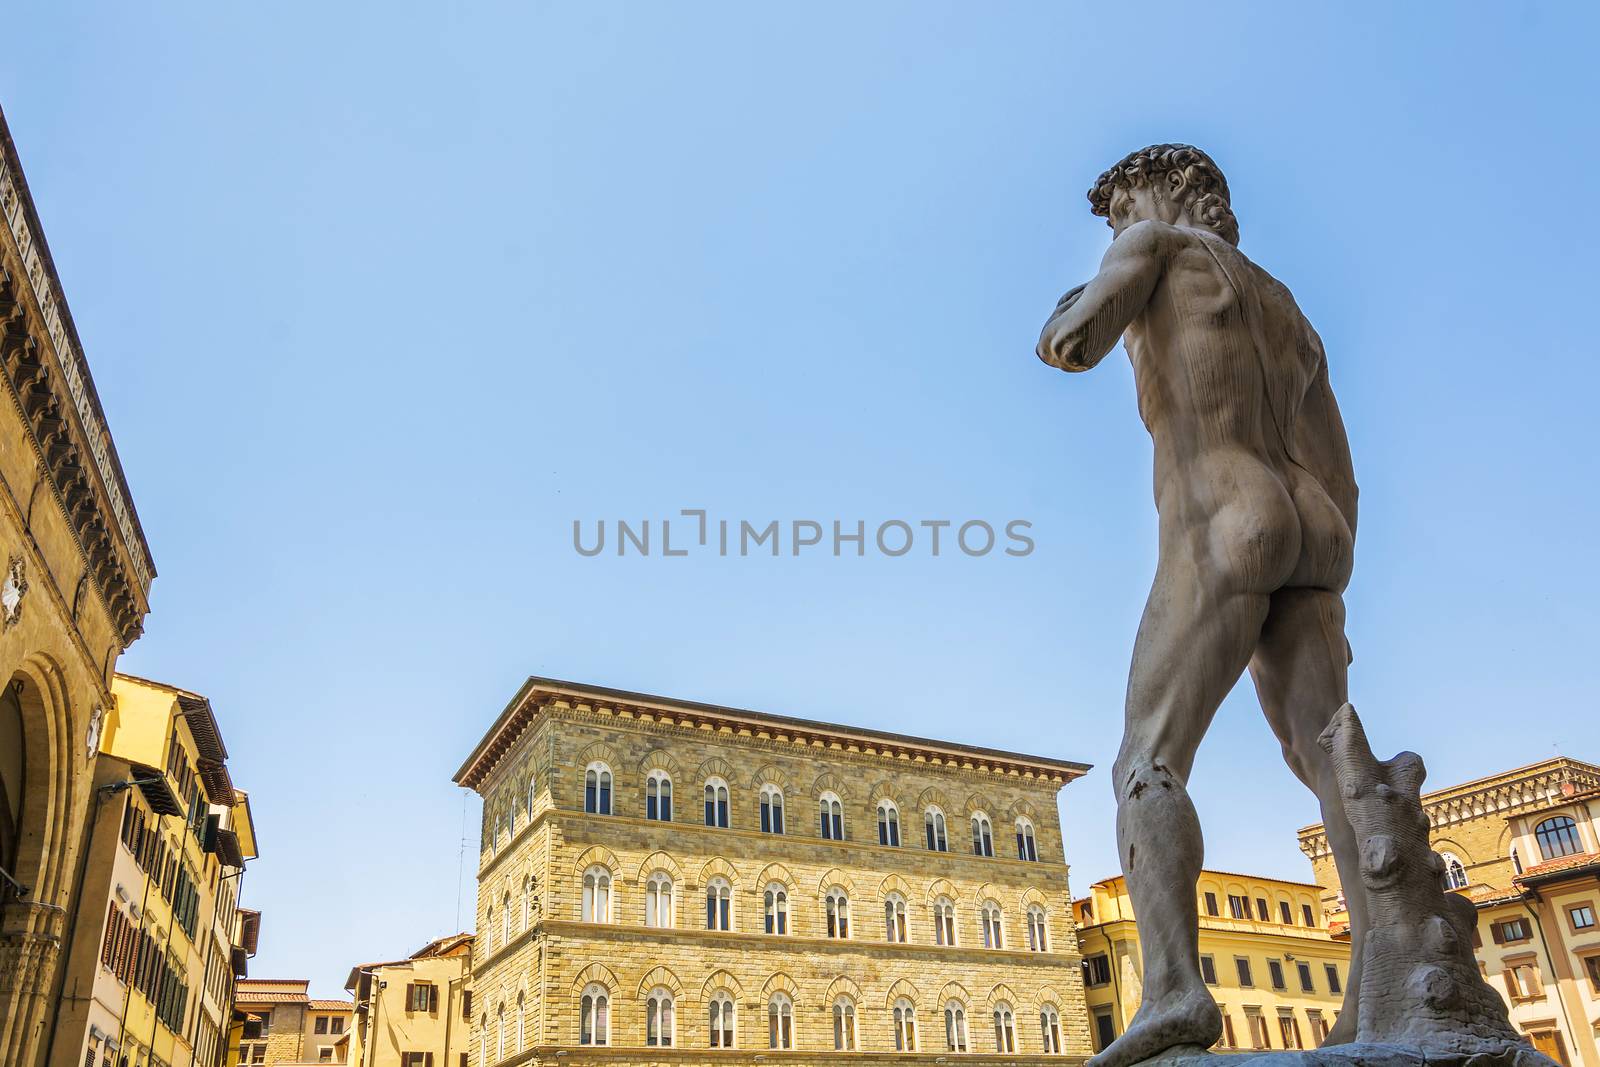 Copy of Michelangelo's David statue standing in its original location, in front of the Palazzo Vecchio at Piazza della Signoria in Florence, Italy